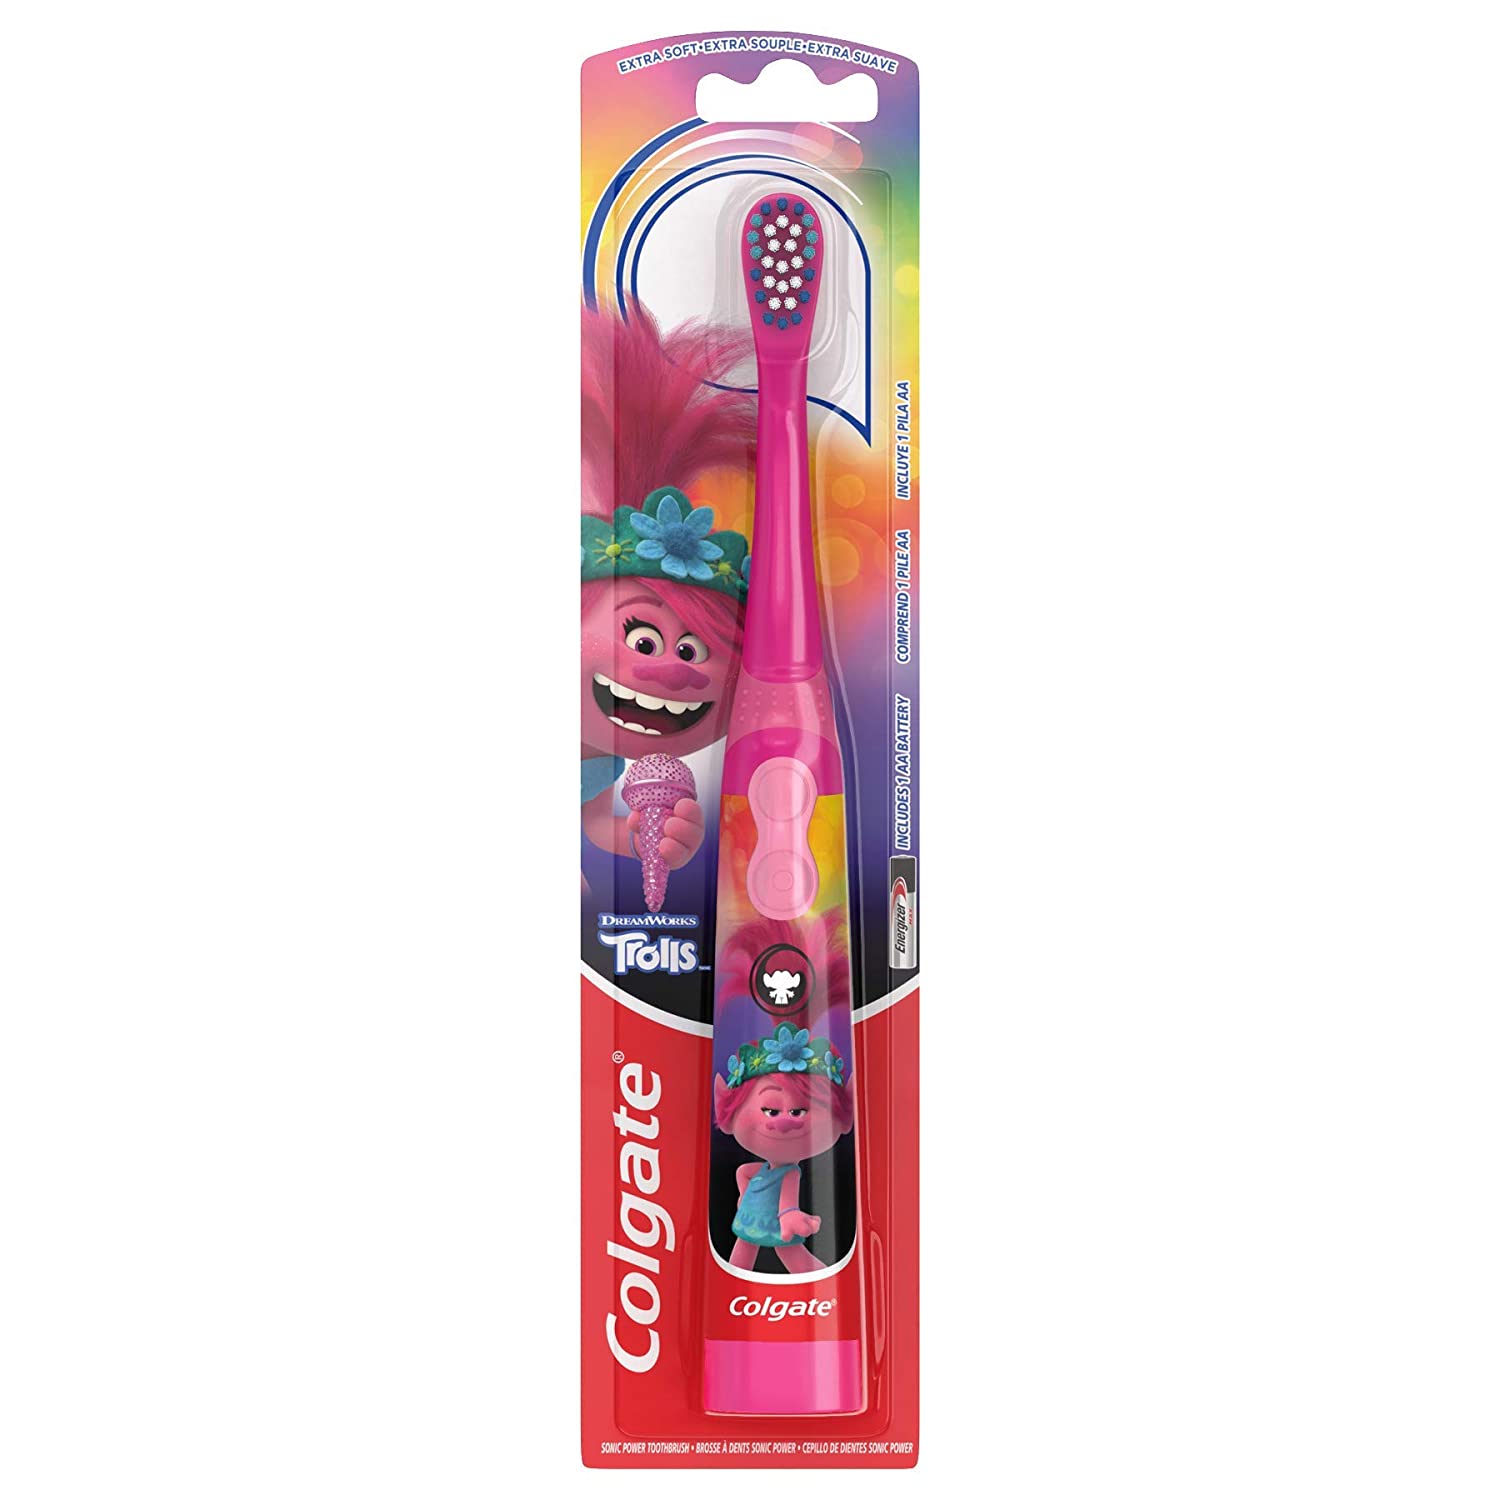 Colgate Kids Battery Powered Toothbrush (Trolls) $2.97